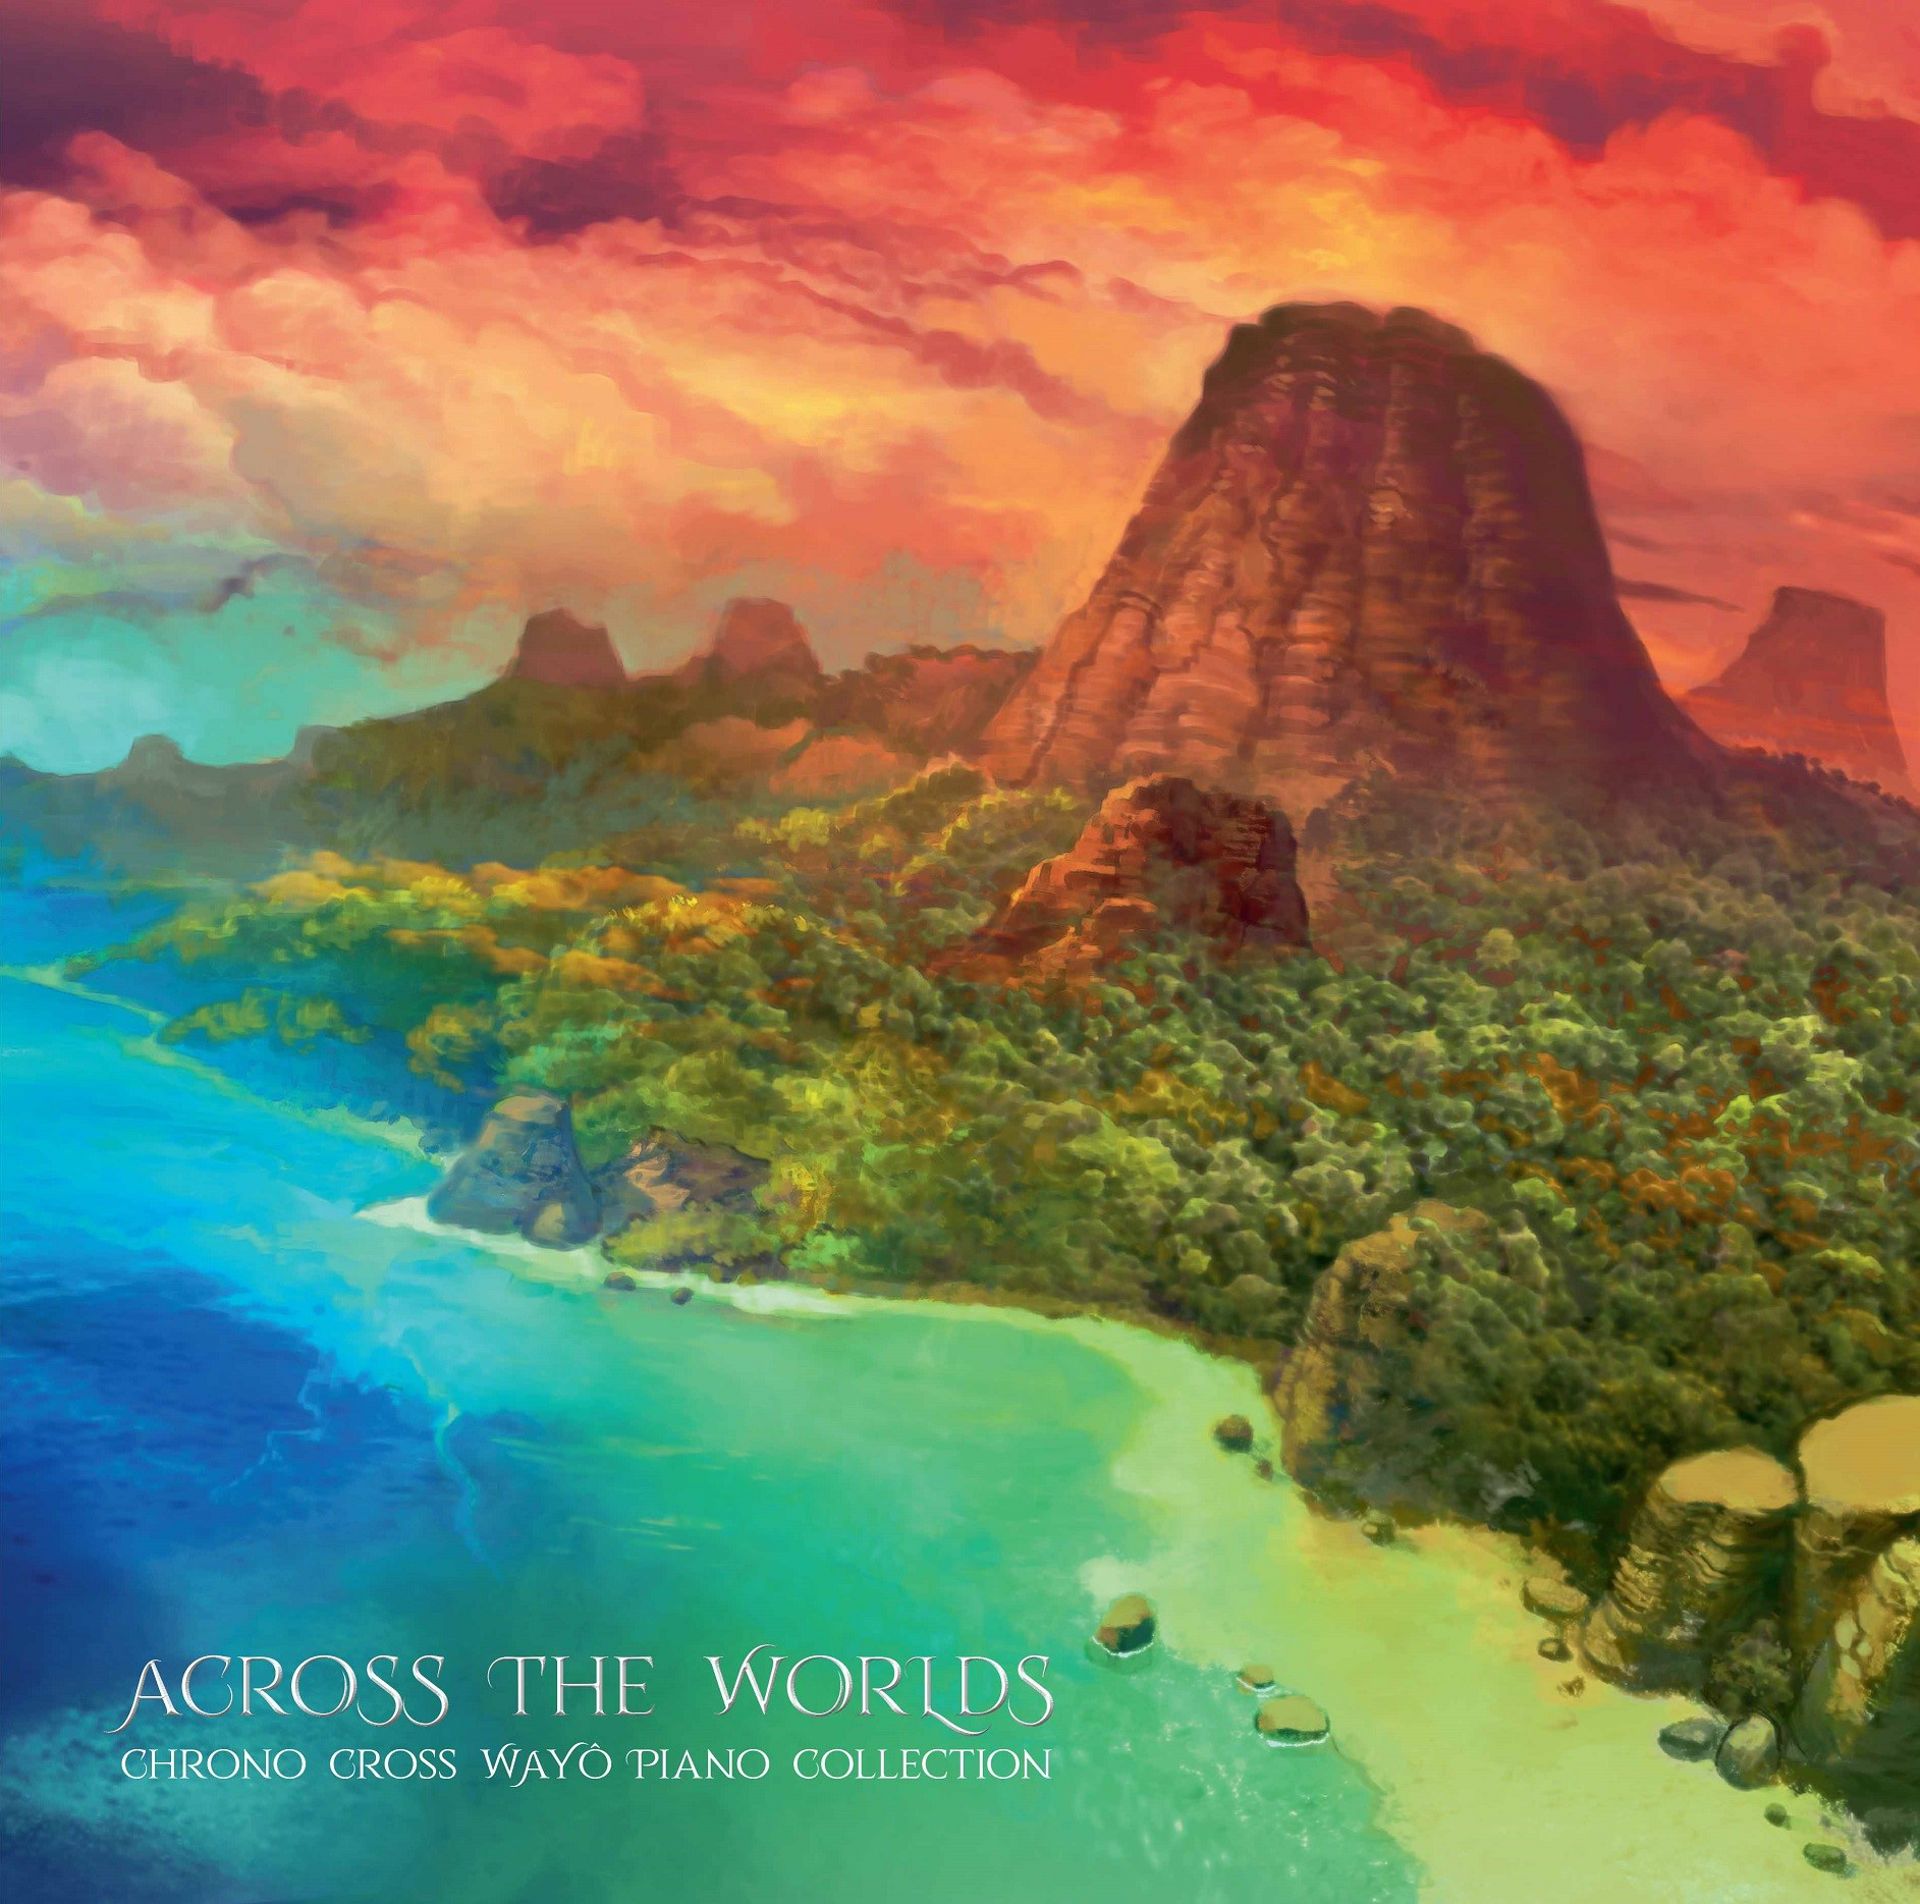 Across the Worlds: Chrono Cross Wayo Piano Collection - 2-LP Bla